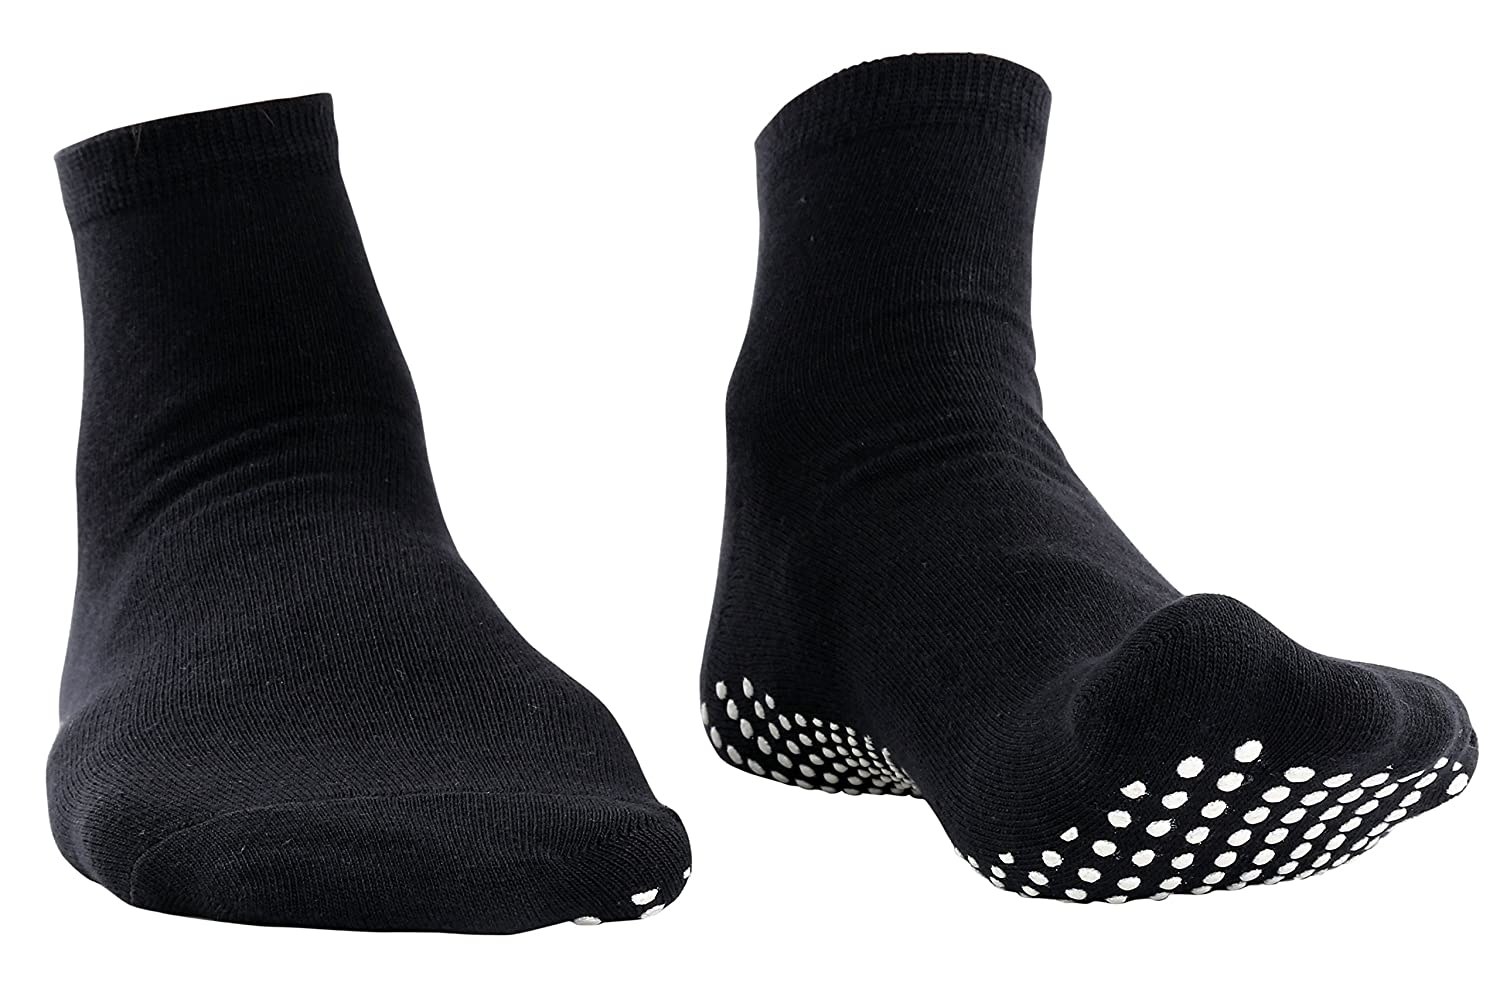 A pair of anti-slip socks in black.